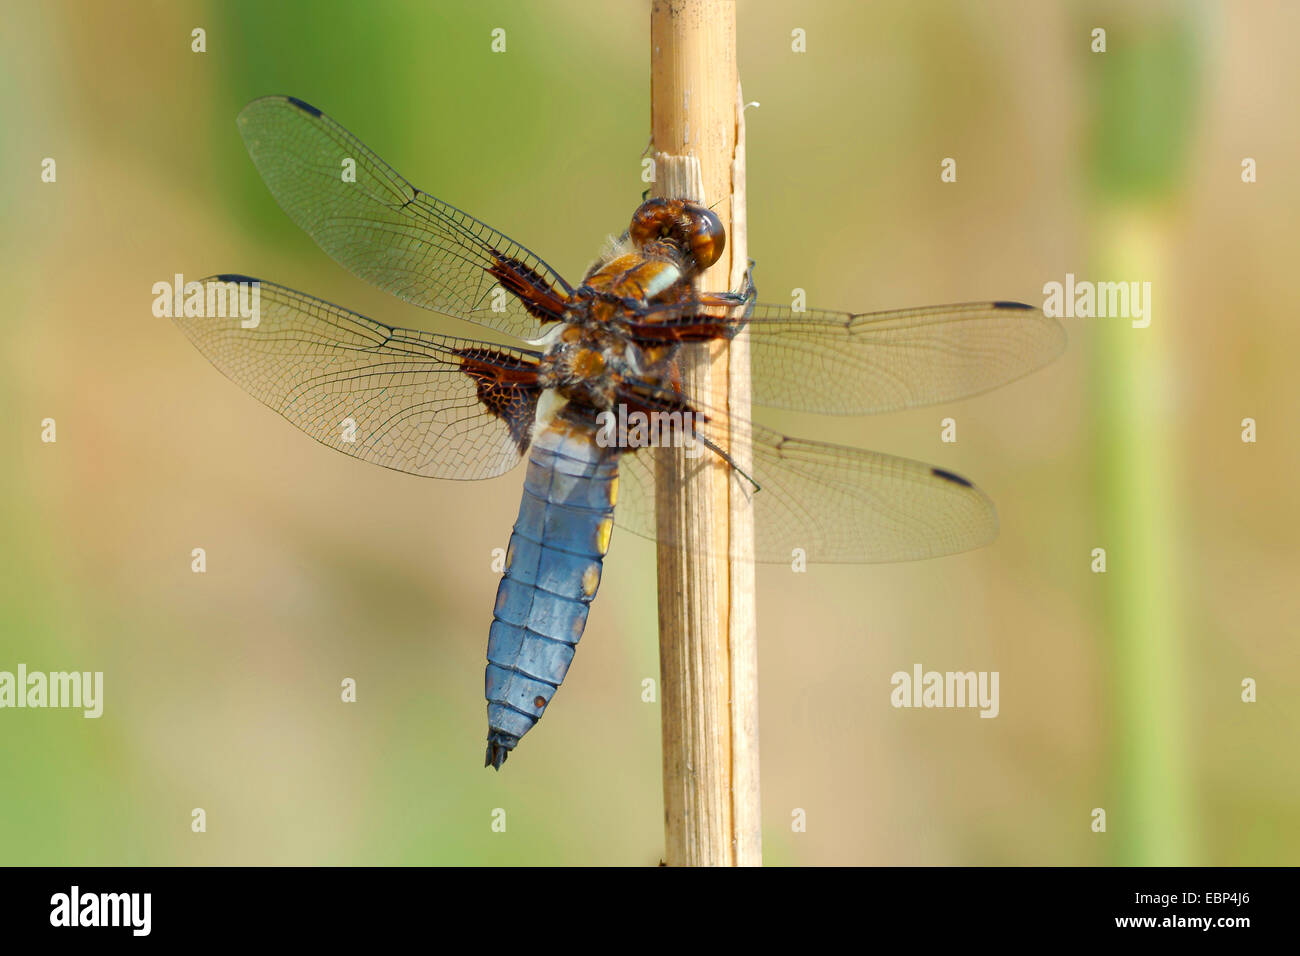 À corps large libellula, large taille chaser (Libellula depressa), homme, Allemagne Banque D'Images